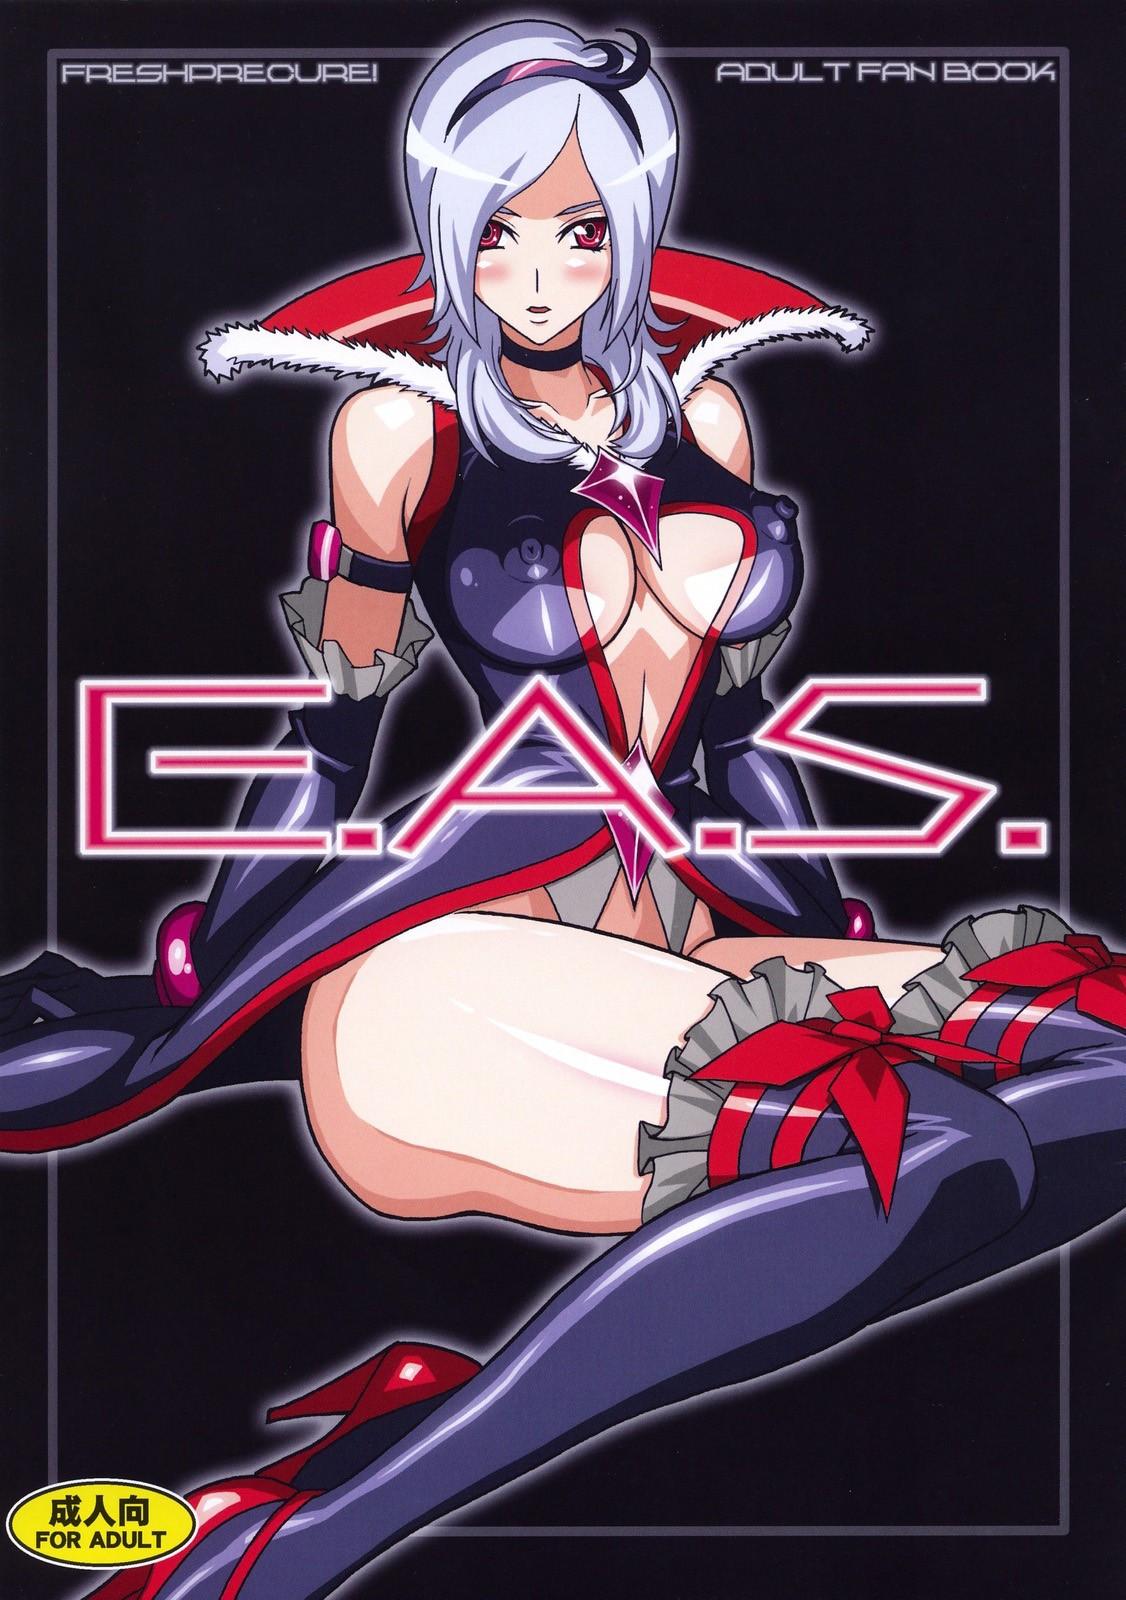 E.A.S. Erotic Adult Slave! 0